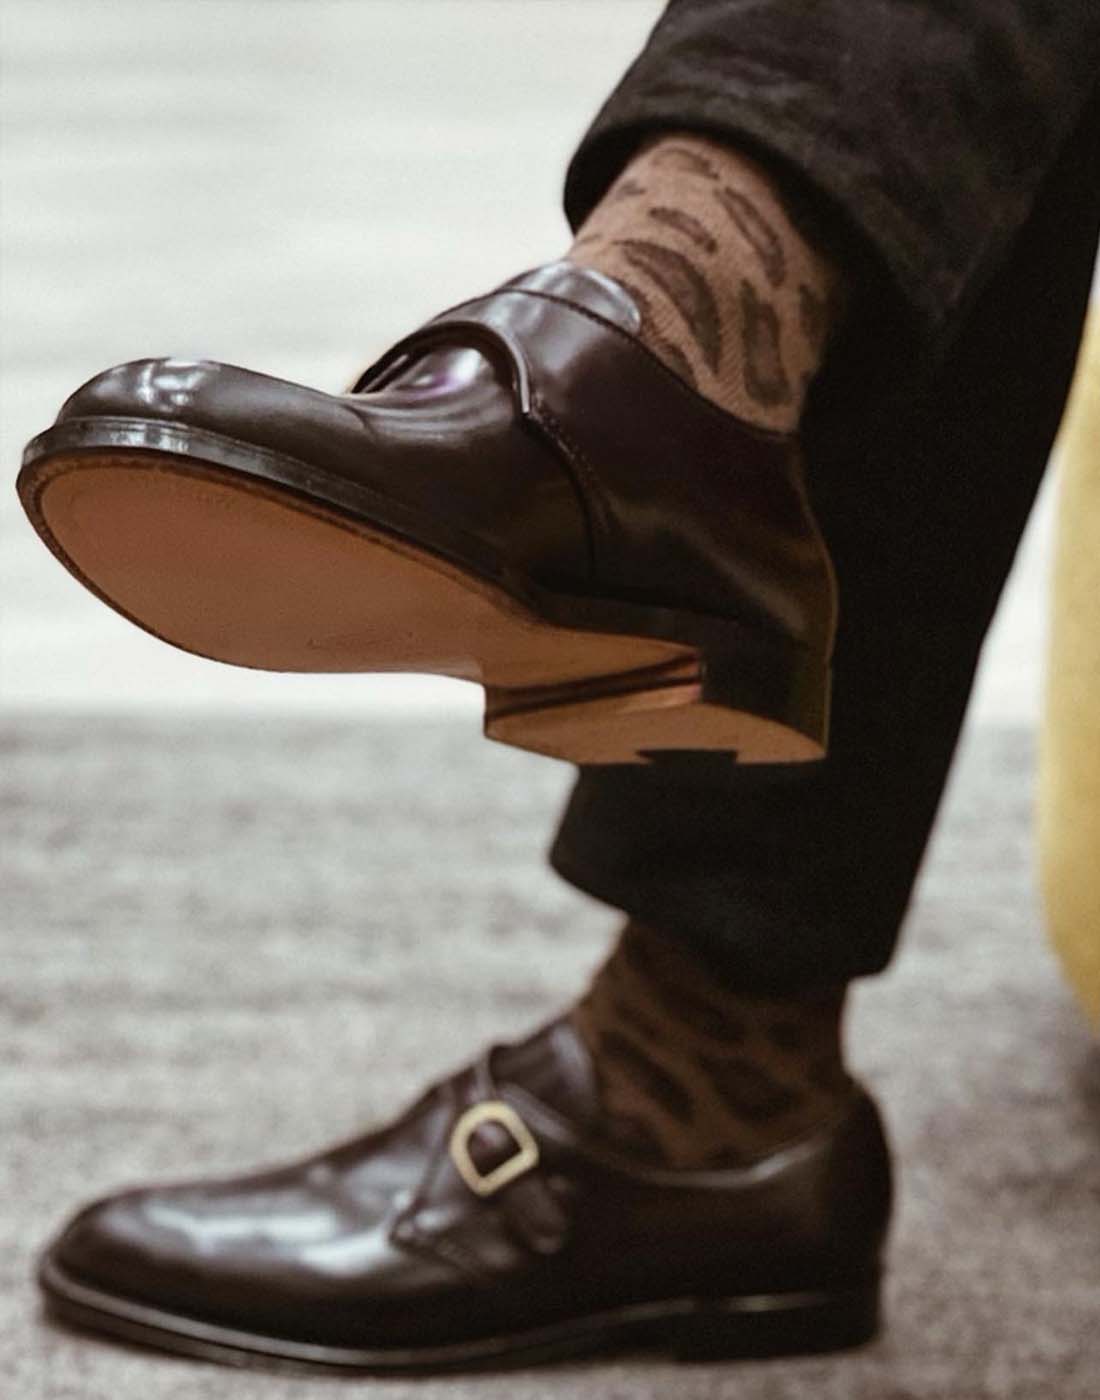 Man wearing leopard print socks and Alden single-strap monk shoes in brown